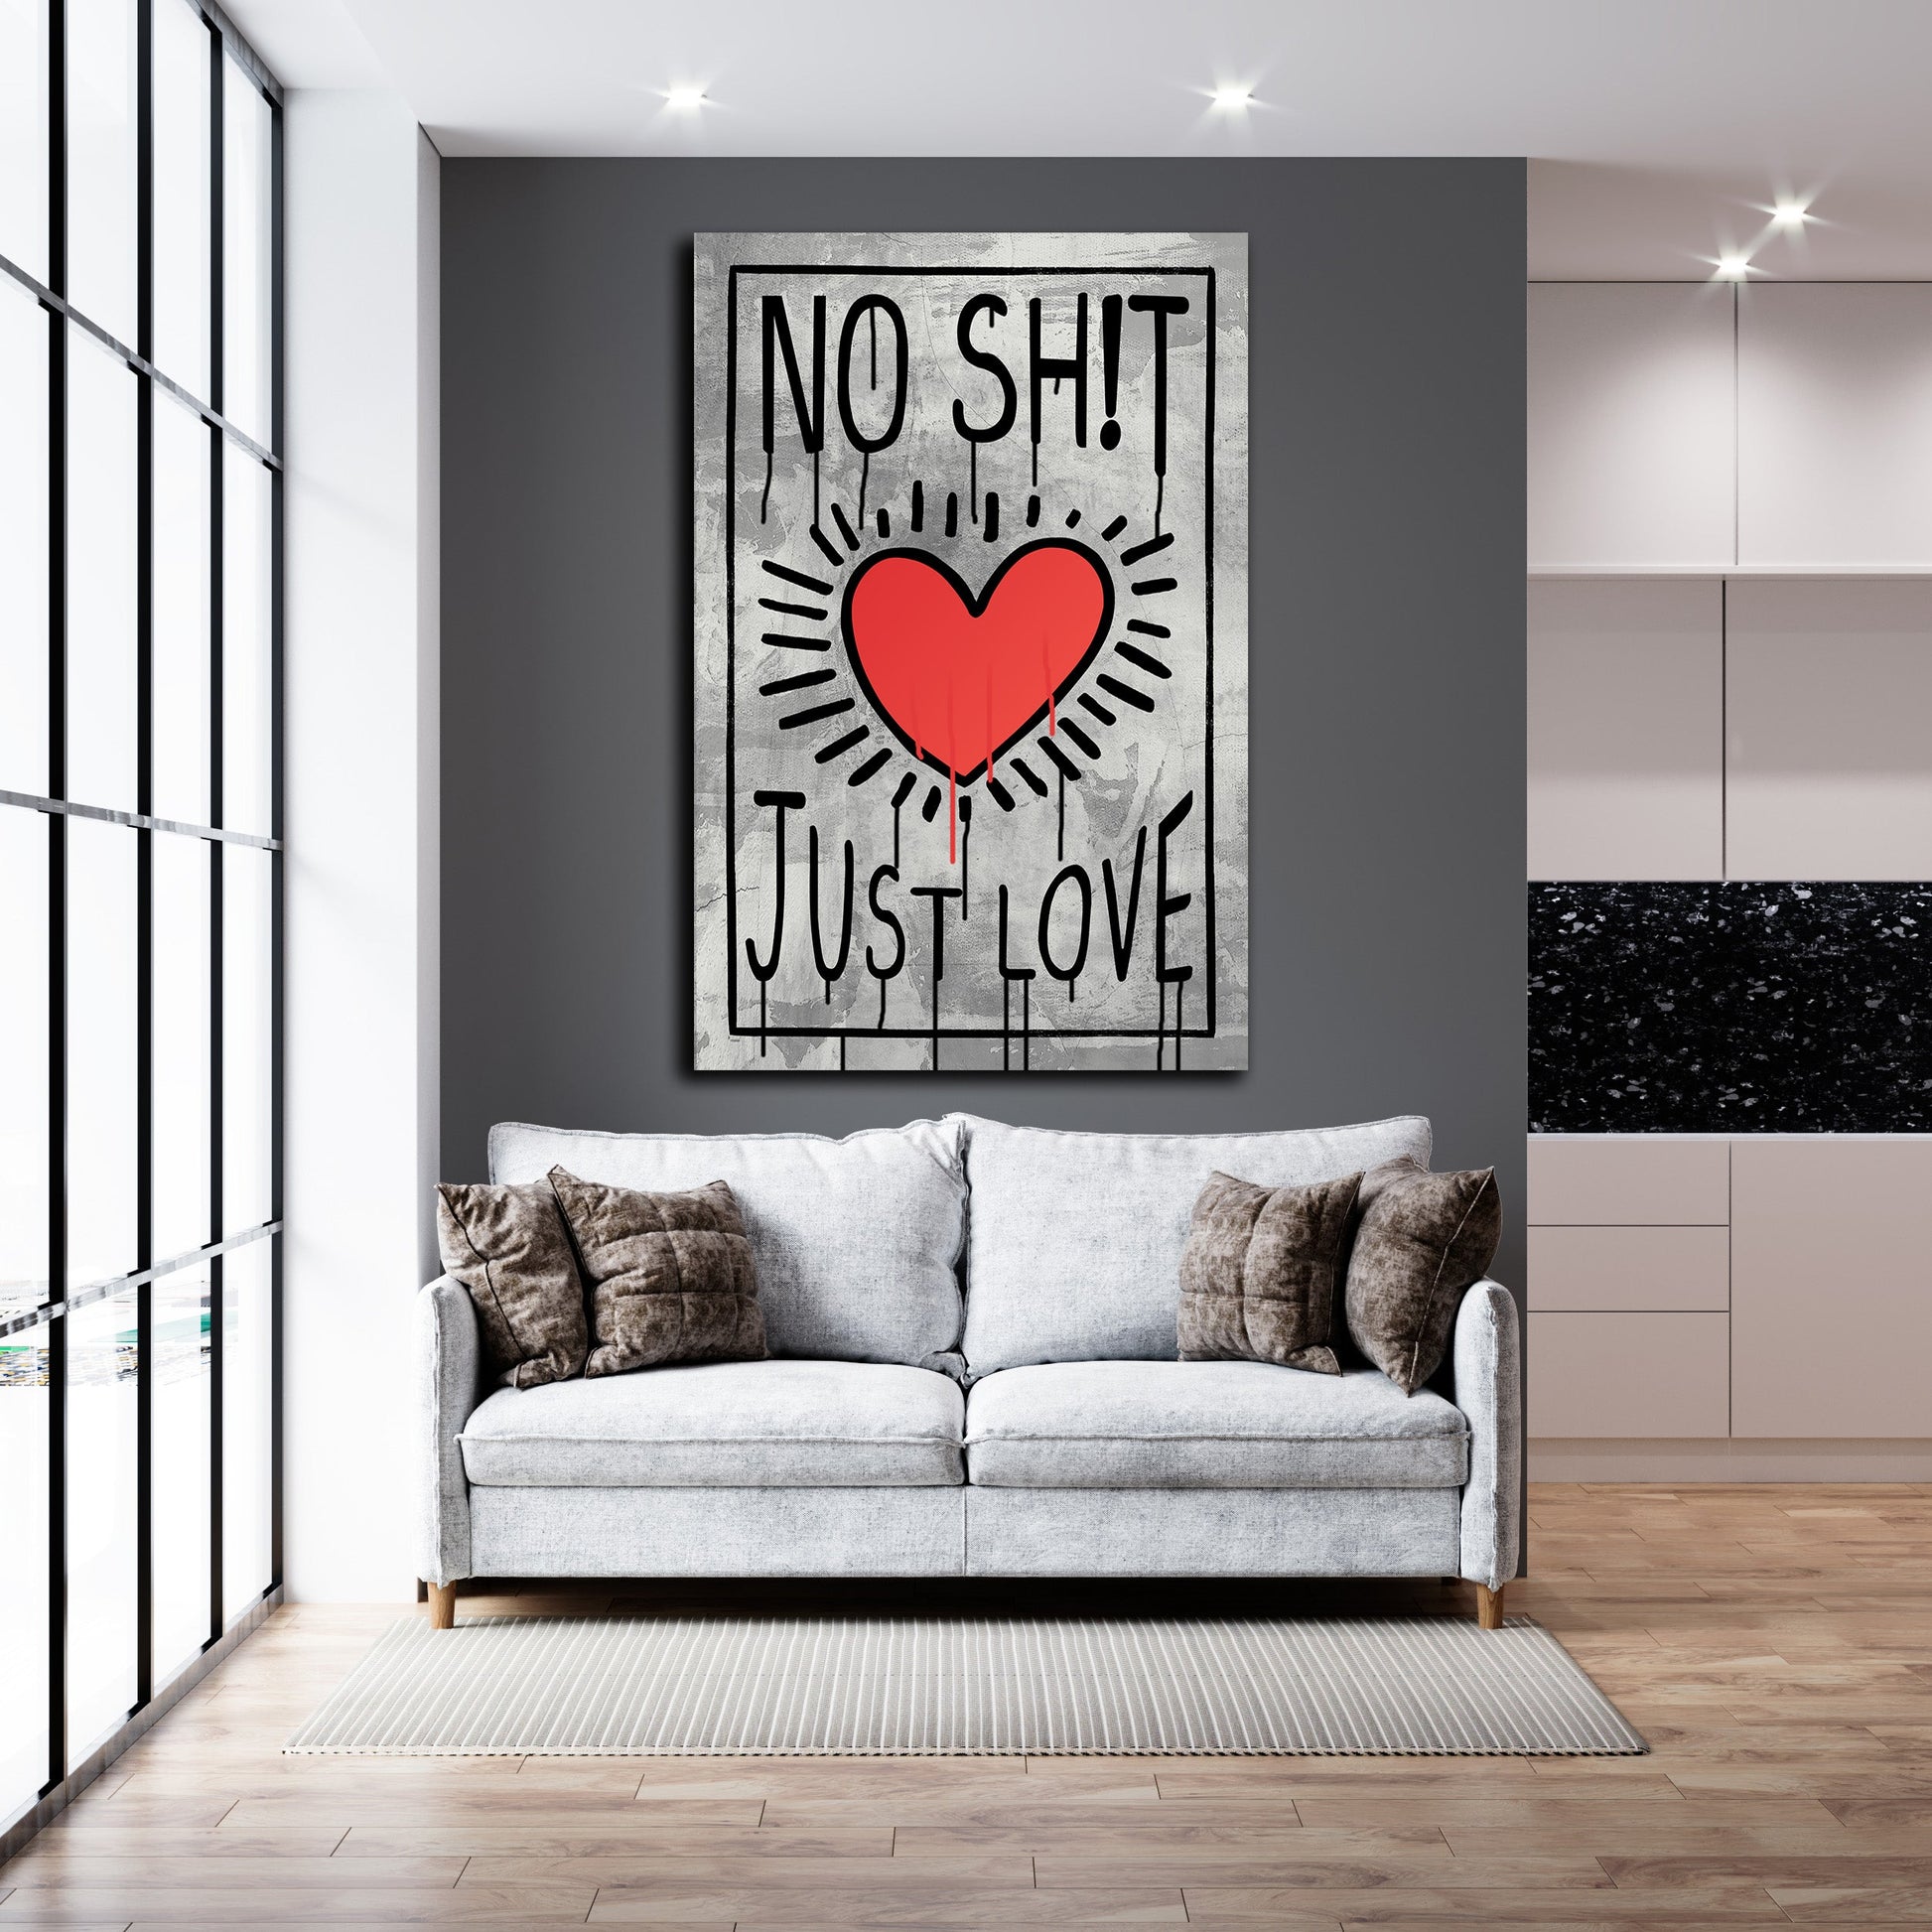 NO SHIT JUST LOVE - 50x70 cm